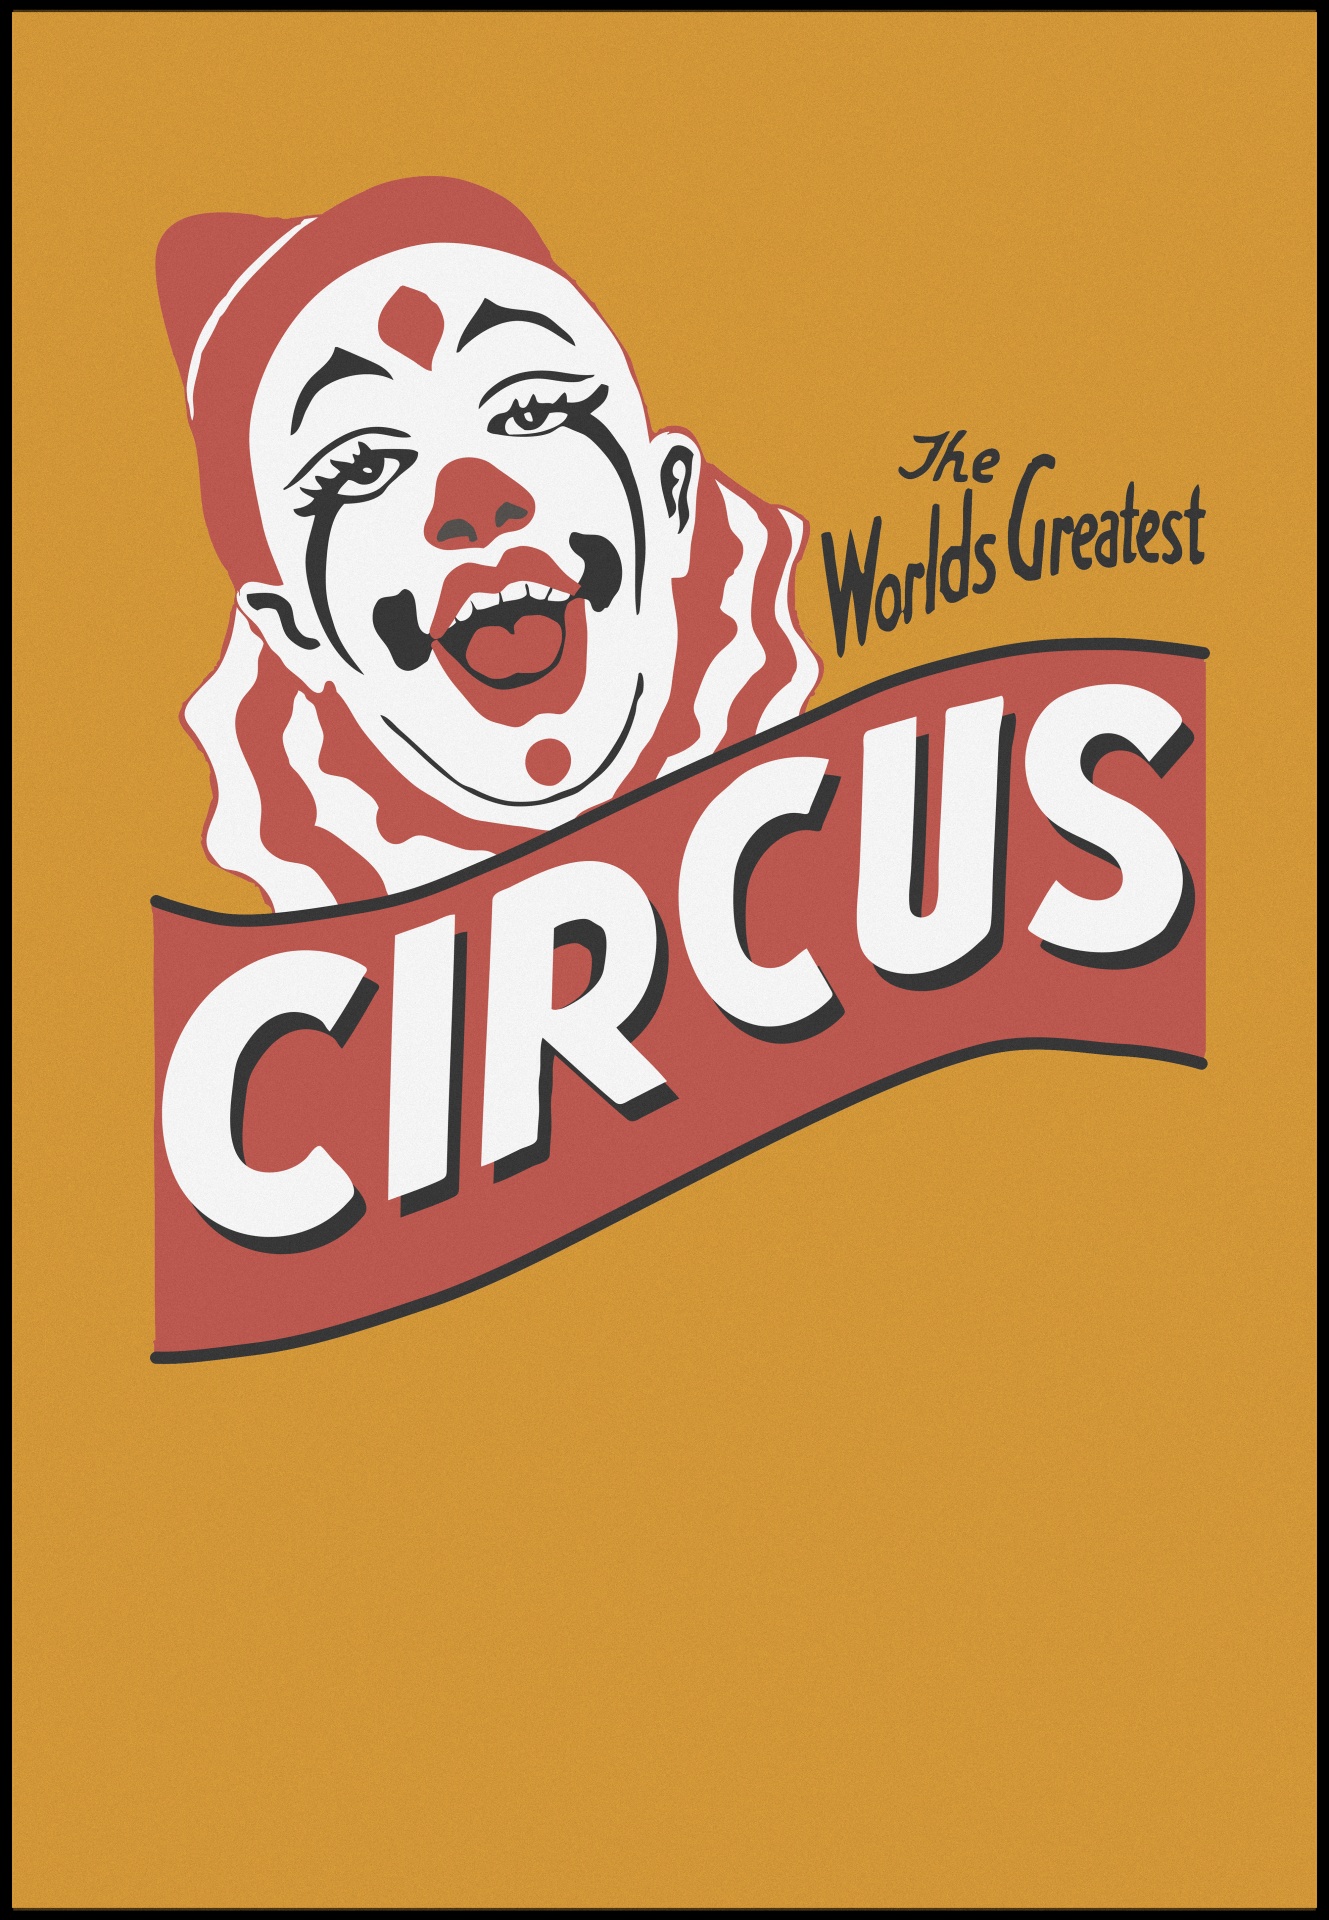 Circus Clown Vintage Poster